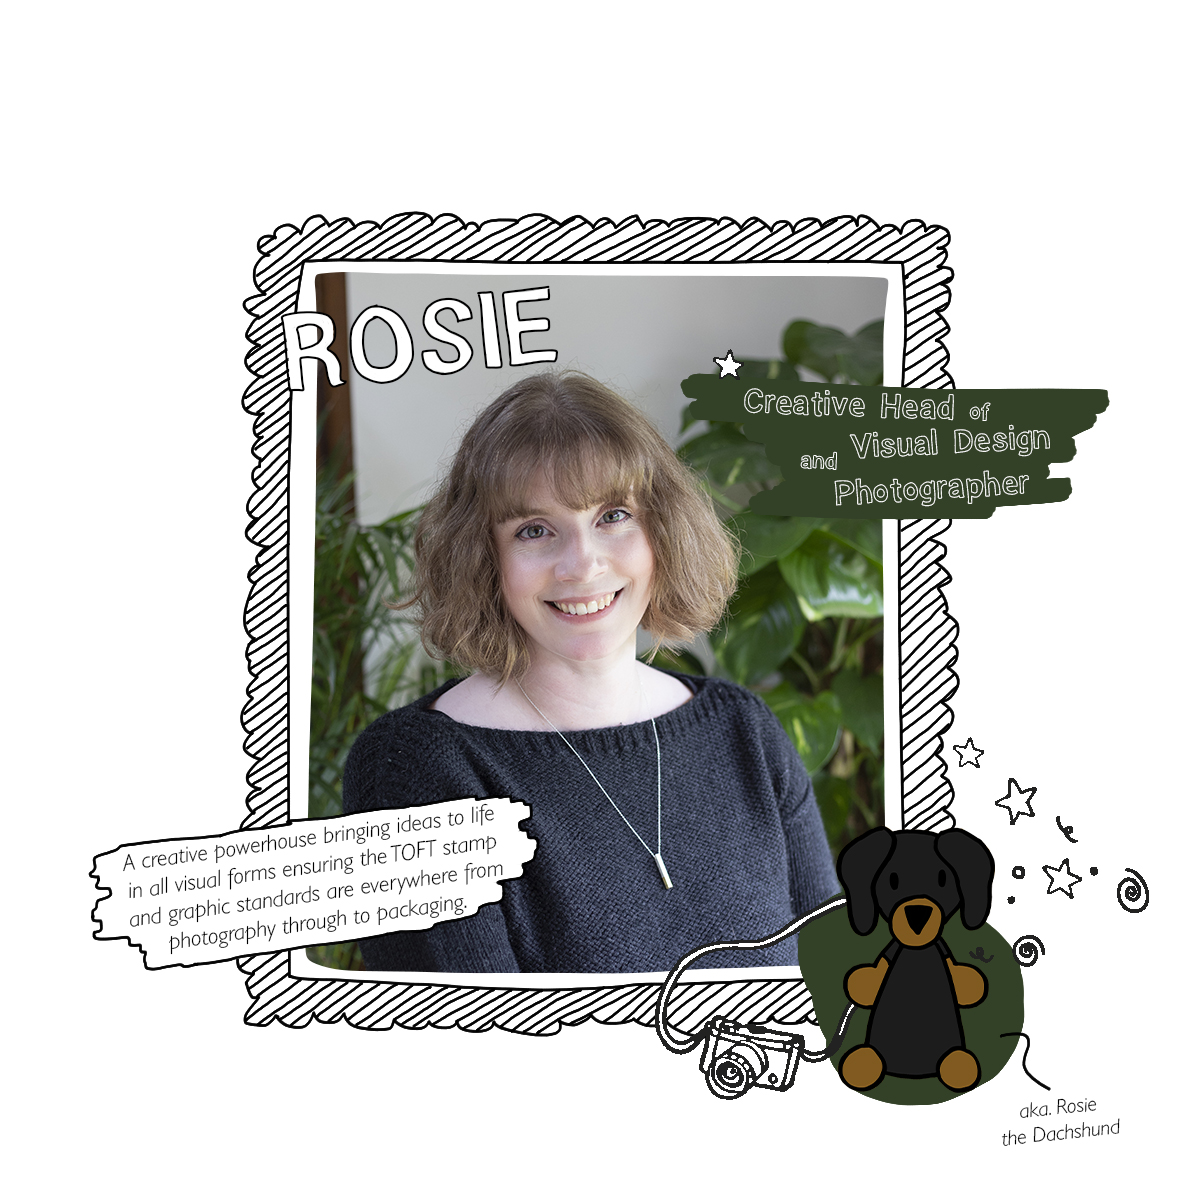 Rosie: Creative Head of Visual Design and Photographer